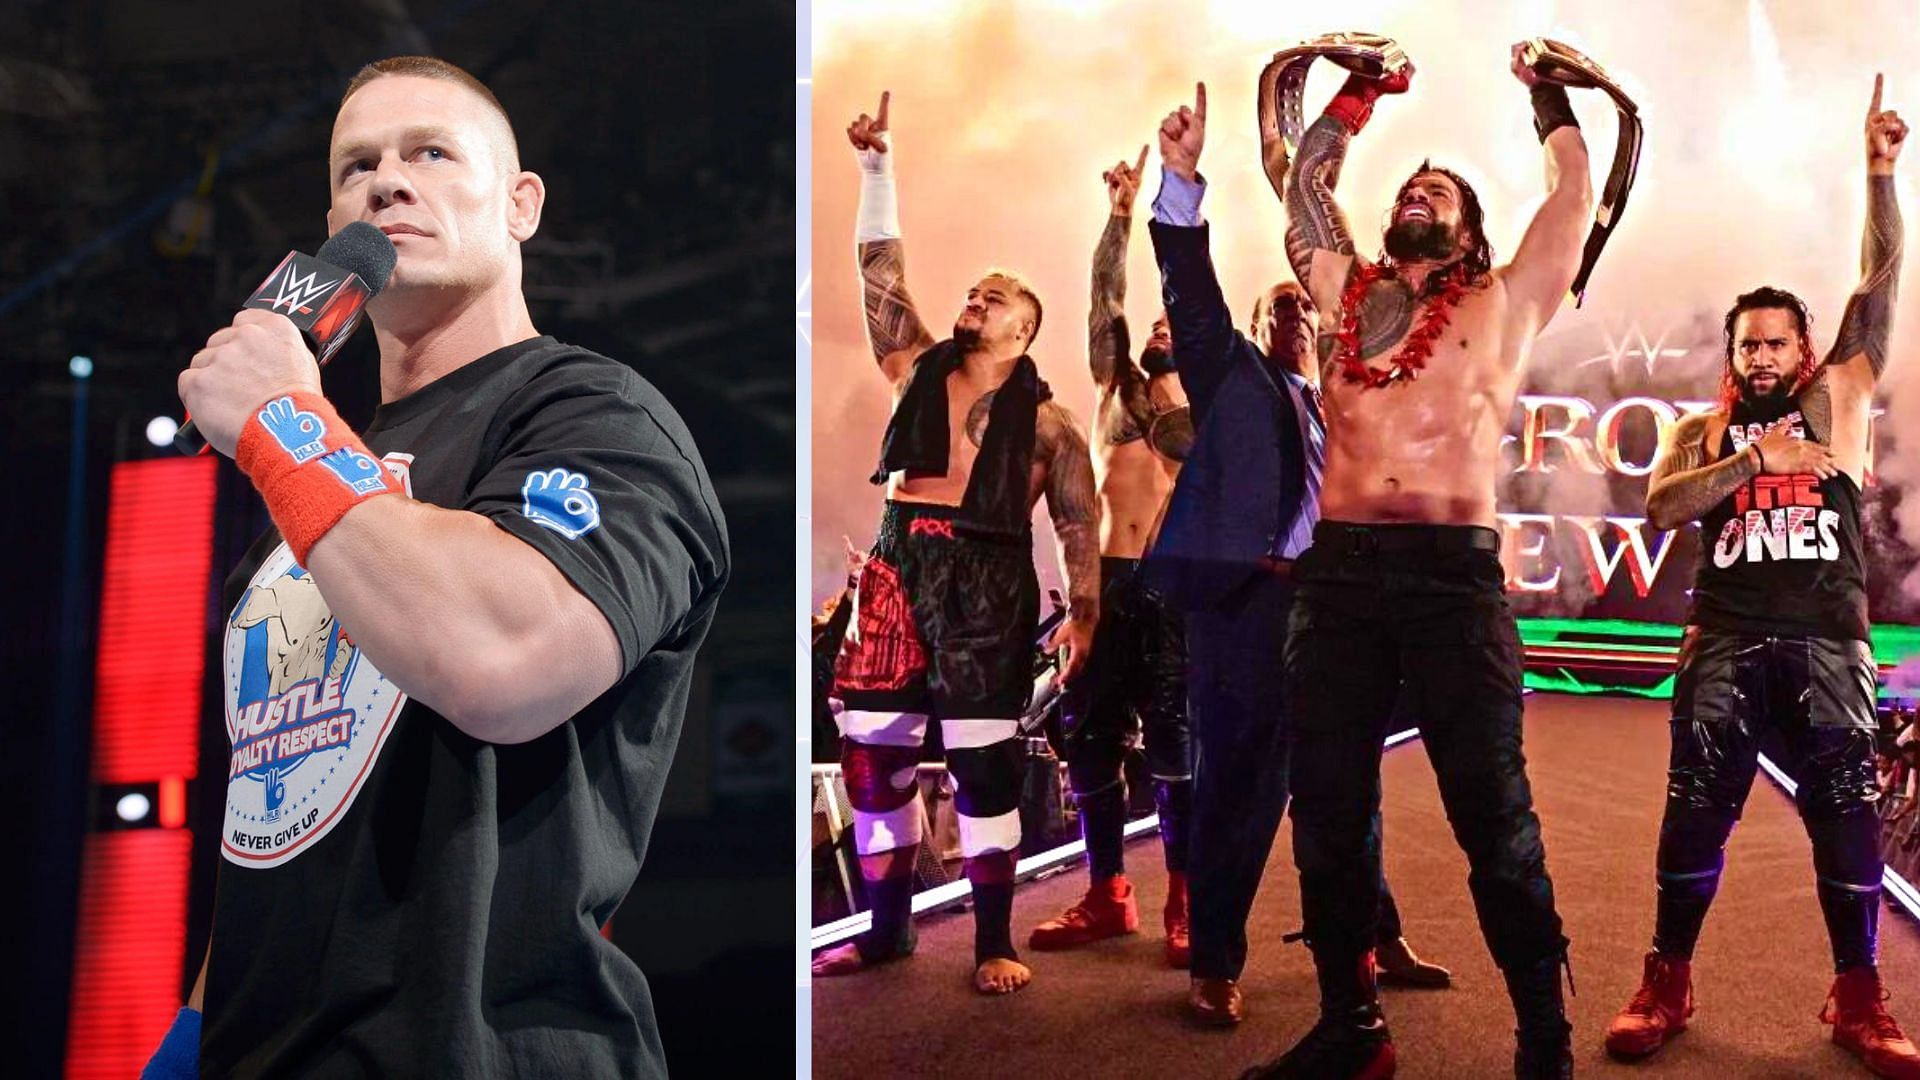 WWE Superstars John Cena and Roman Reigns alongside the rest The Bloodline 